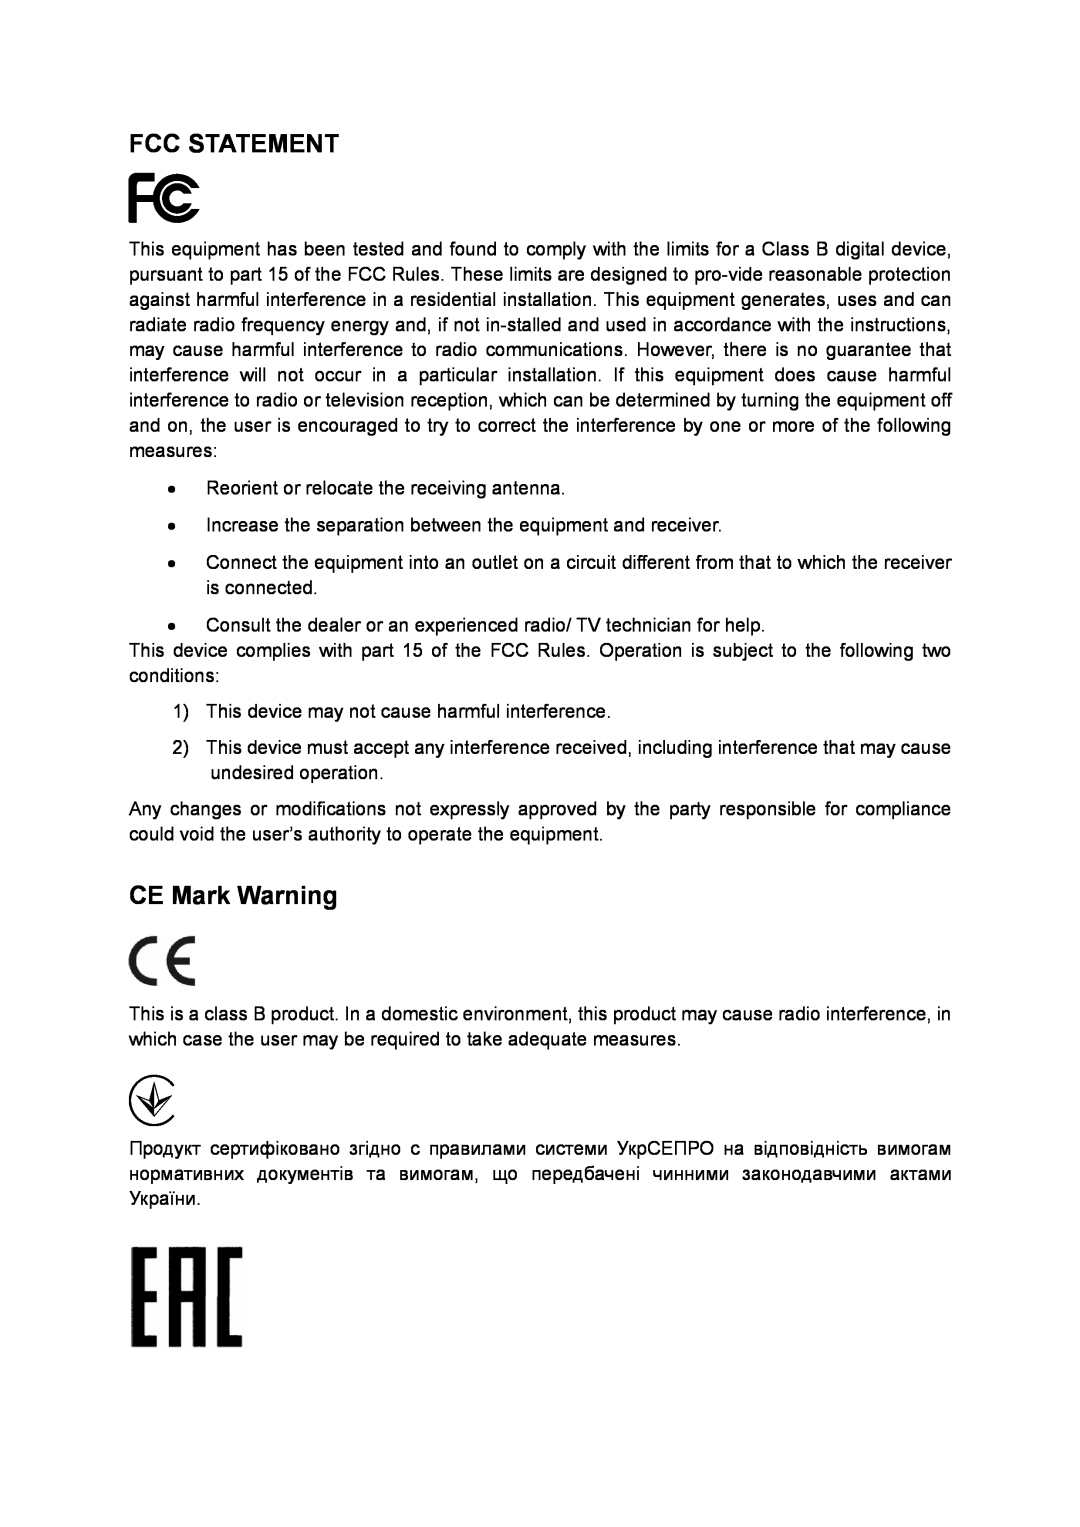 TP-Link TL-SC2020 manual Fcc Statement, CE Mark Warning 